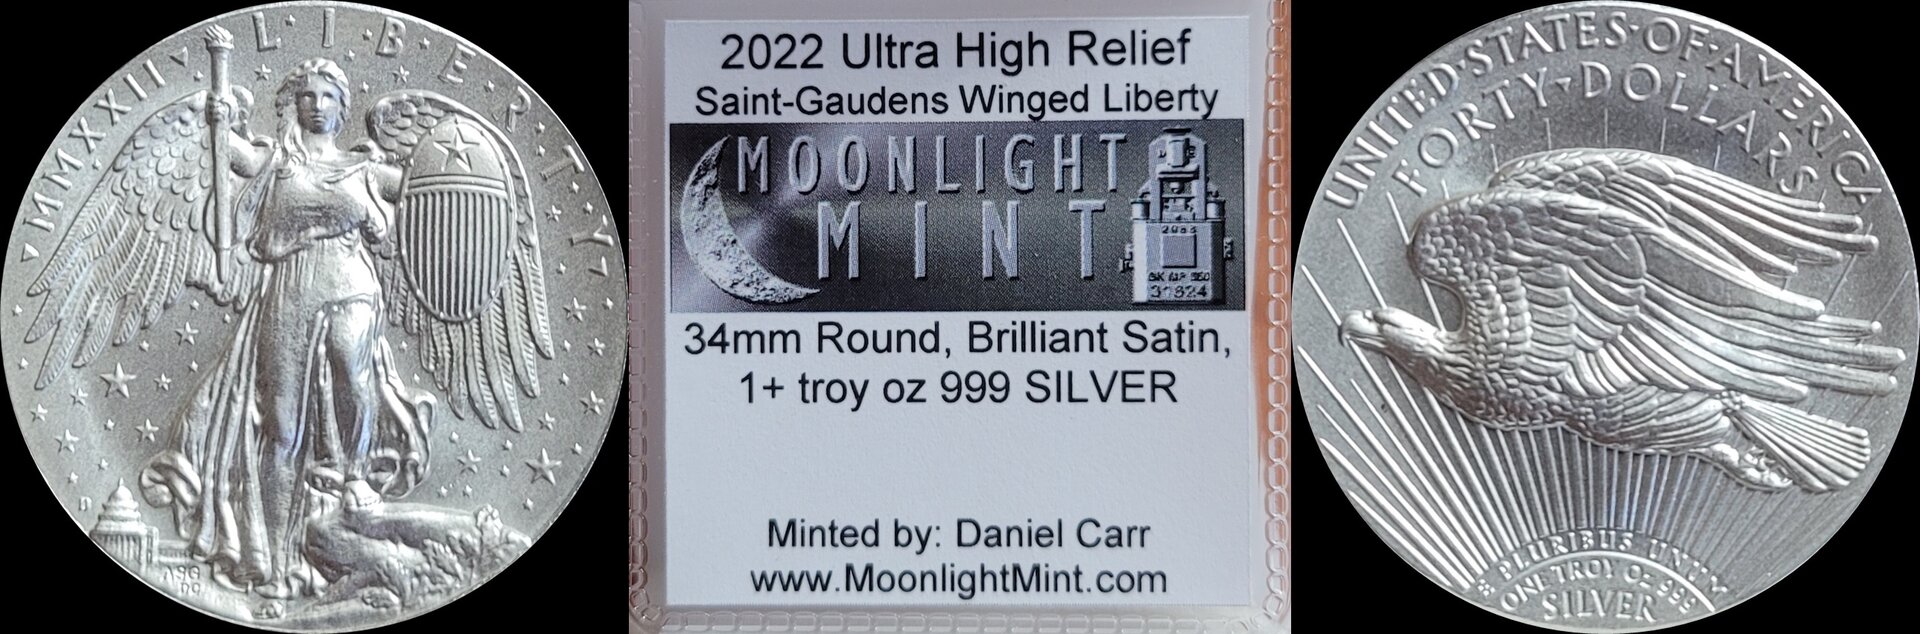 MMXXII (2022) Winged Saint-Gaudens Ultra High Relief, E.jpg